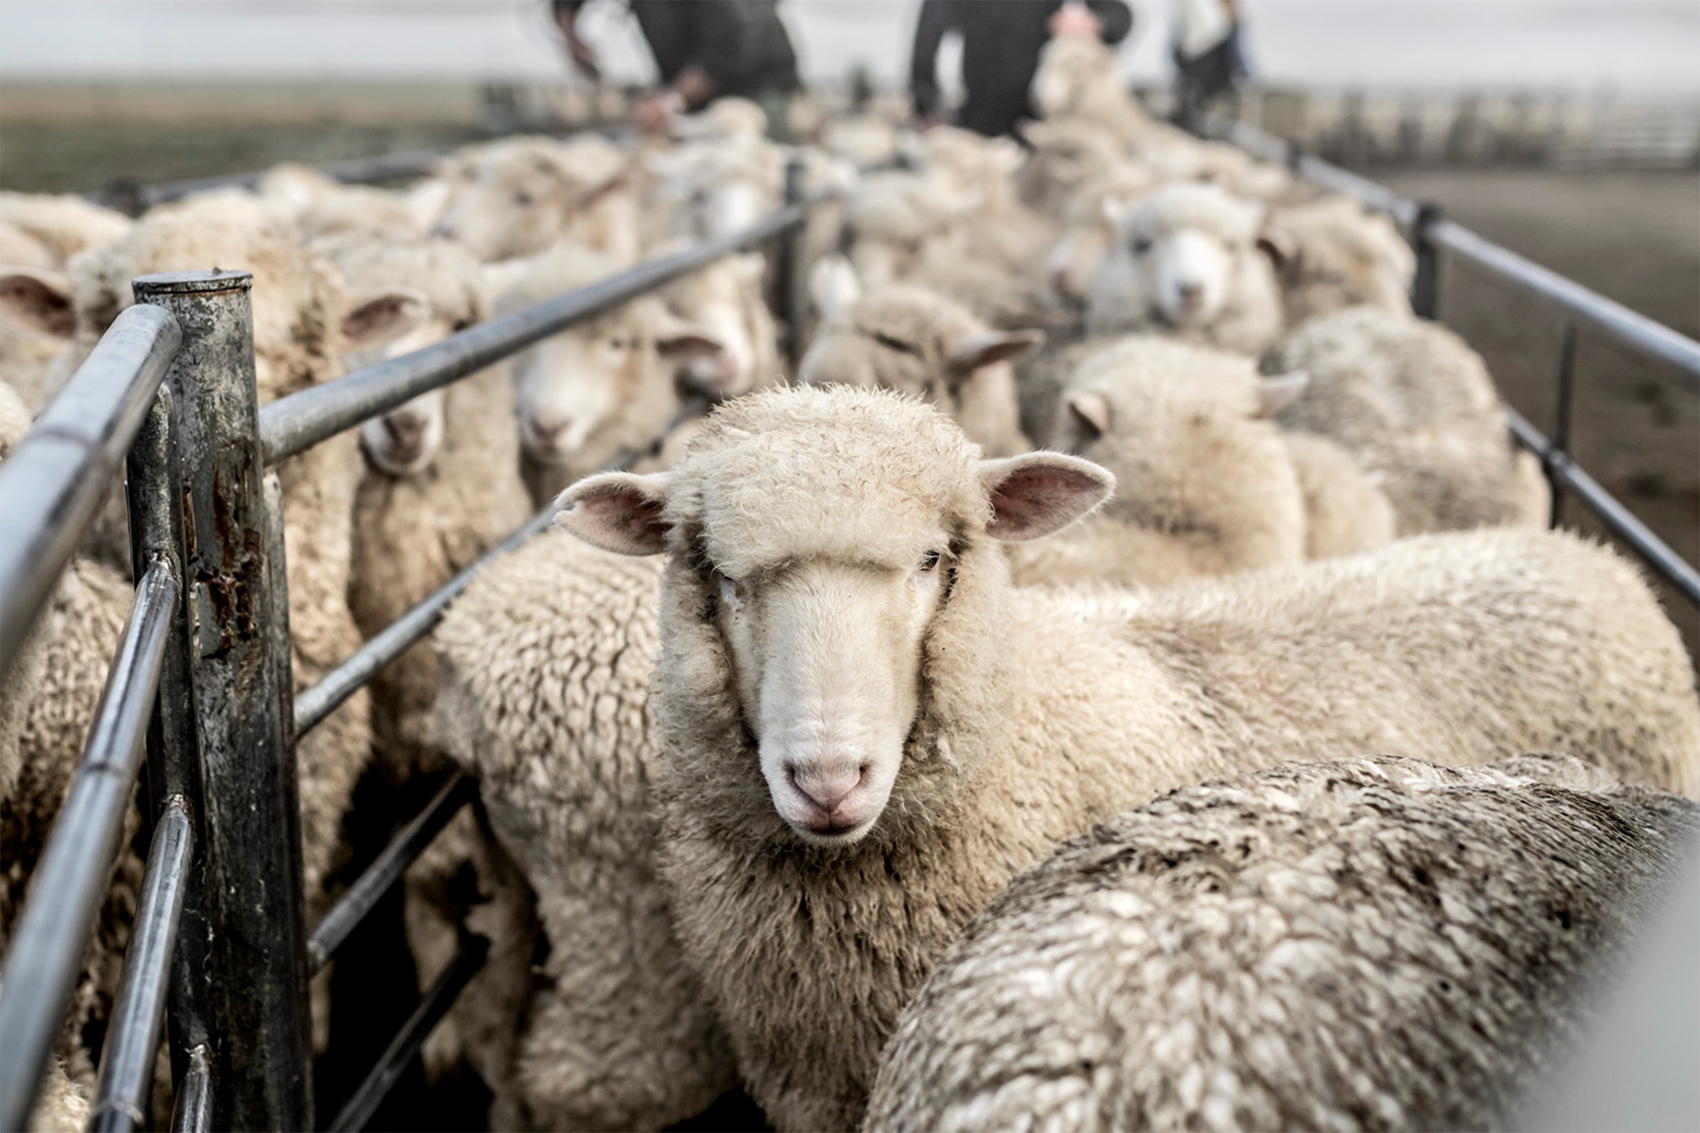 Photograph of sheep on a farm